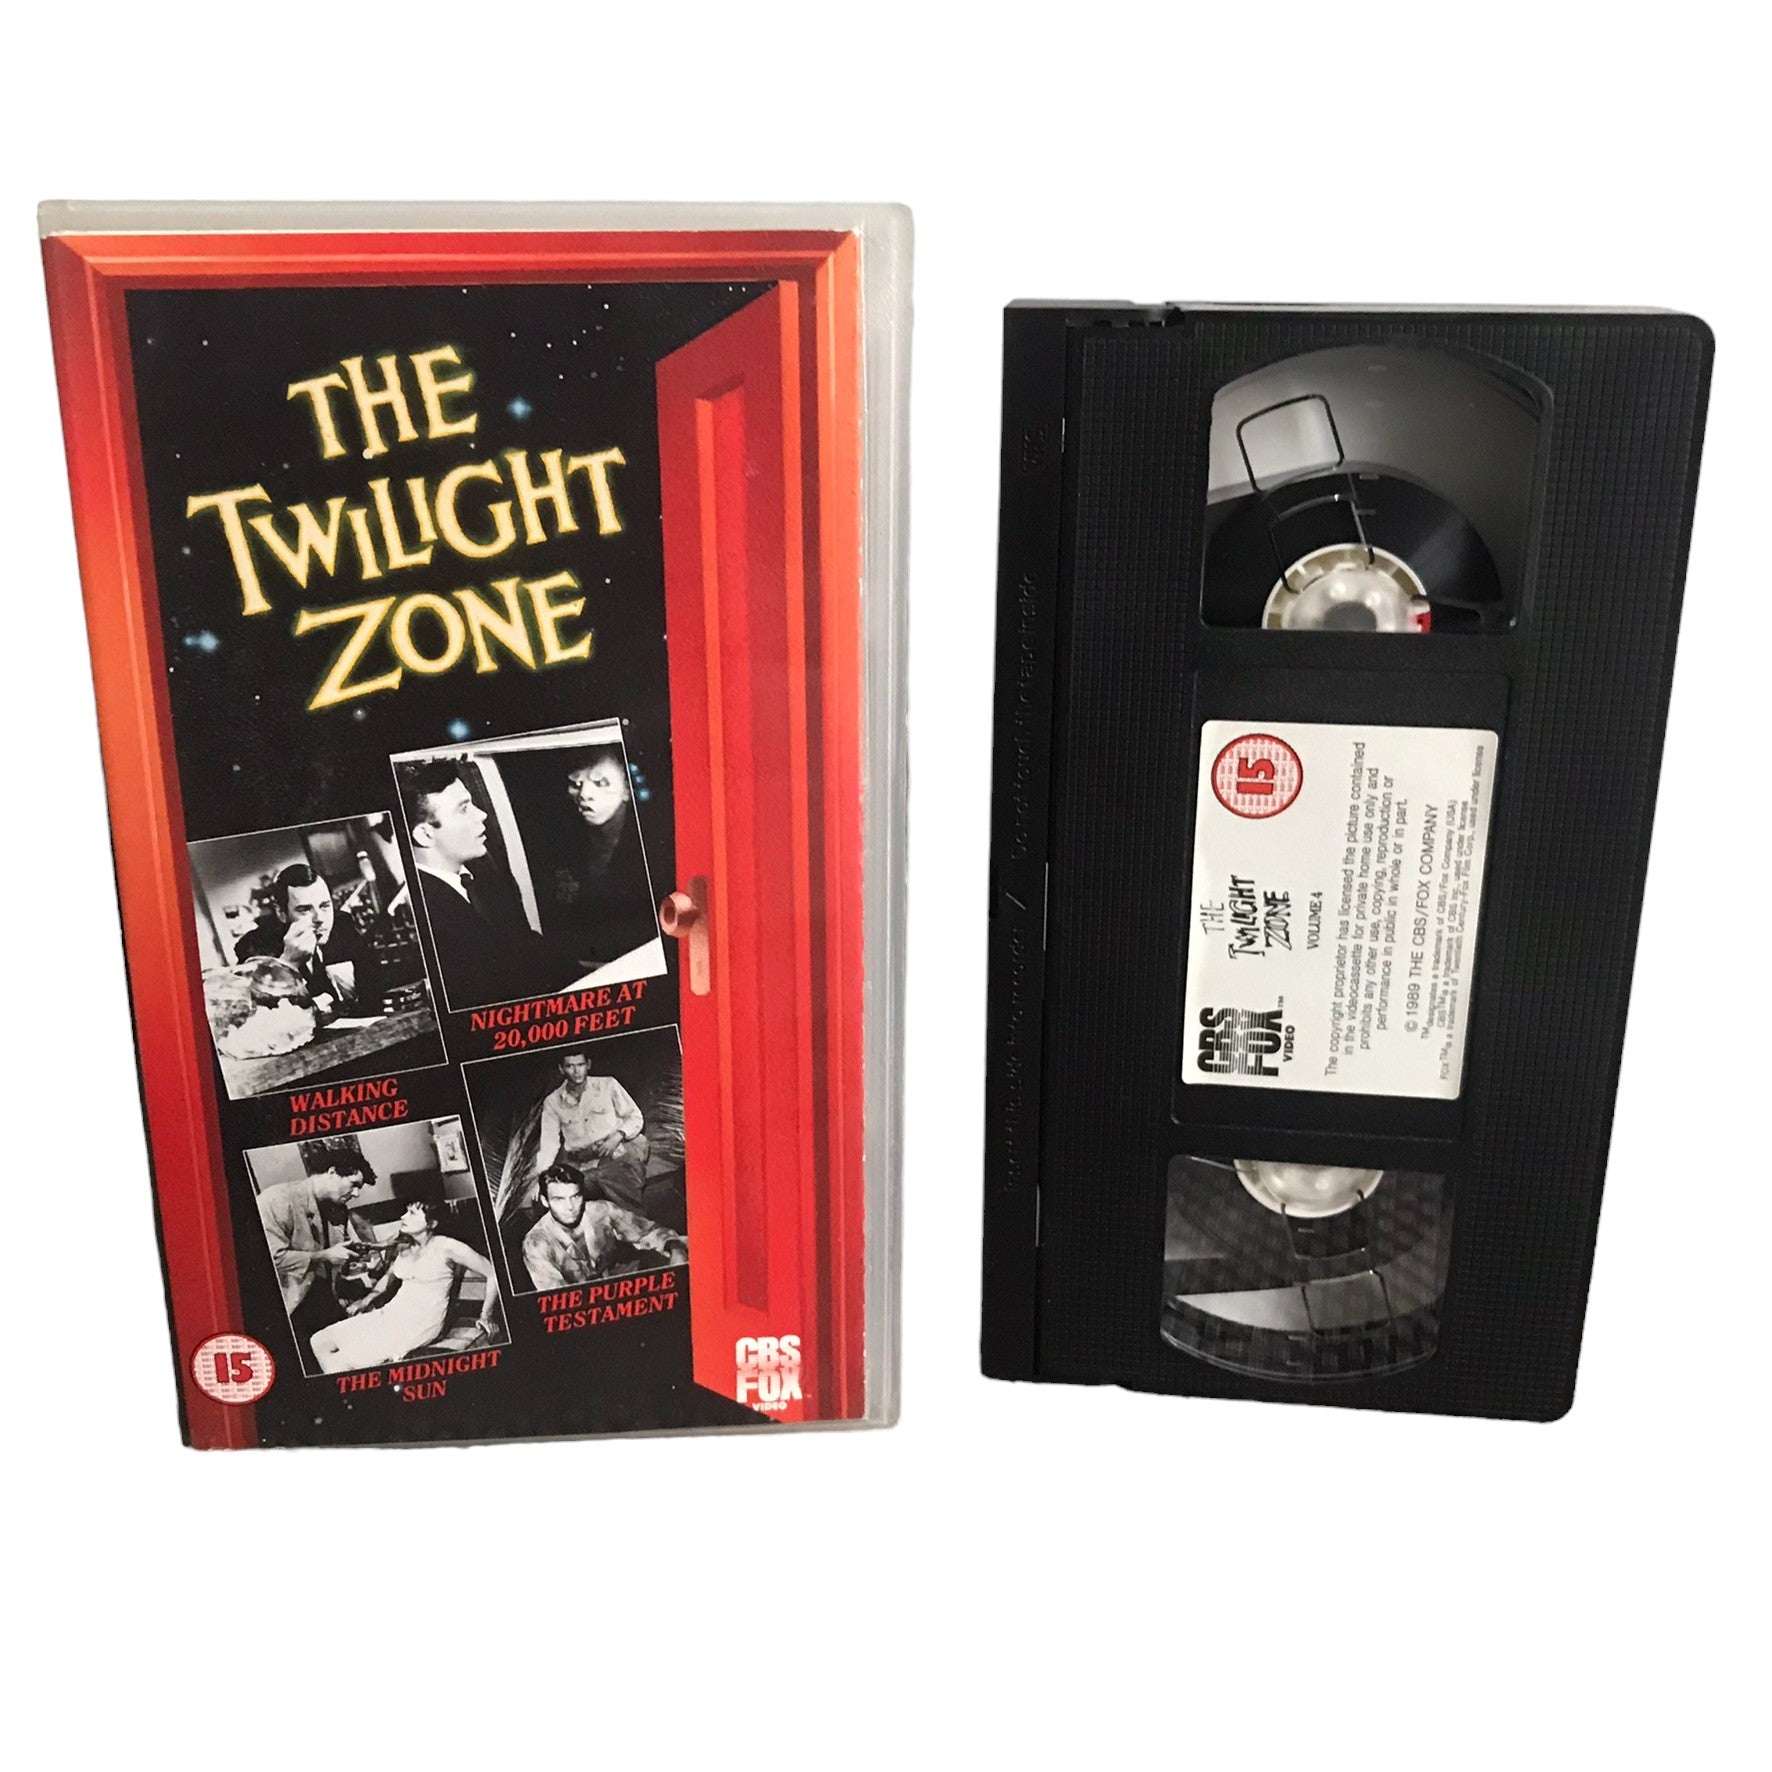 The Twilight Zone - Volume 4 - Rod Serling - CBS FOX - Horror - Pal - VHS-